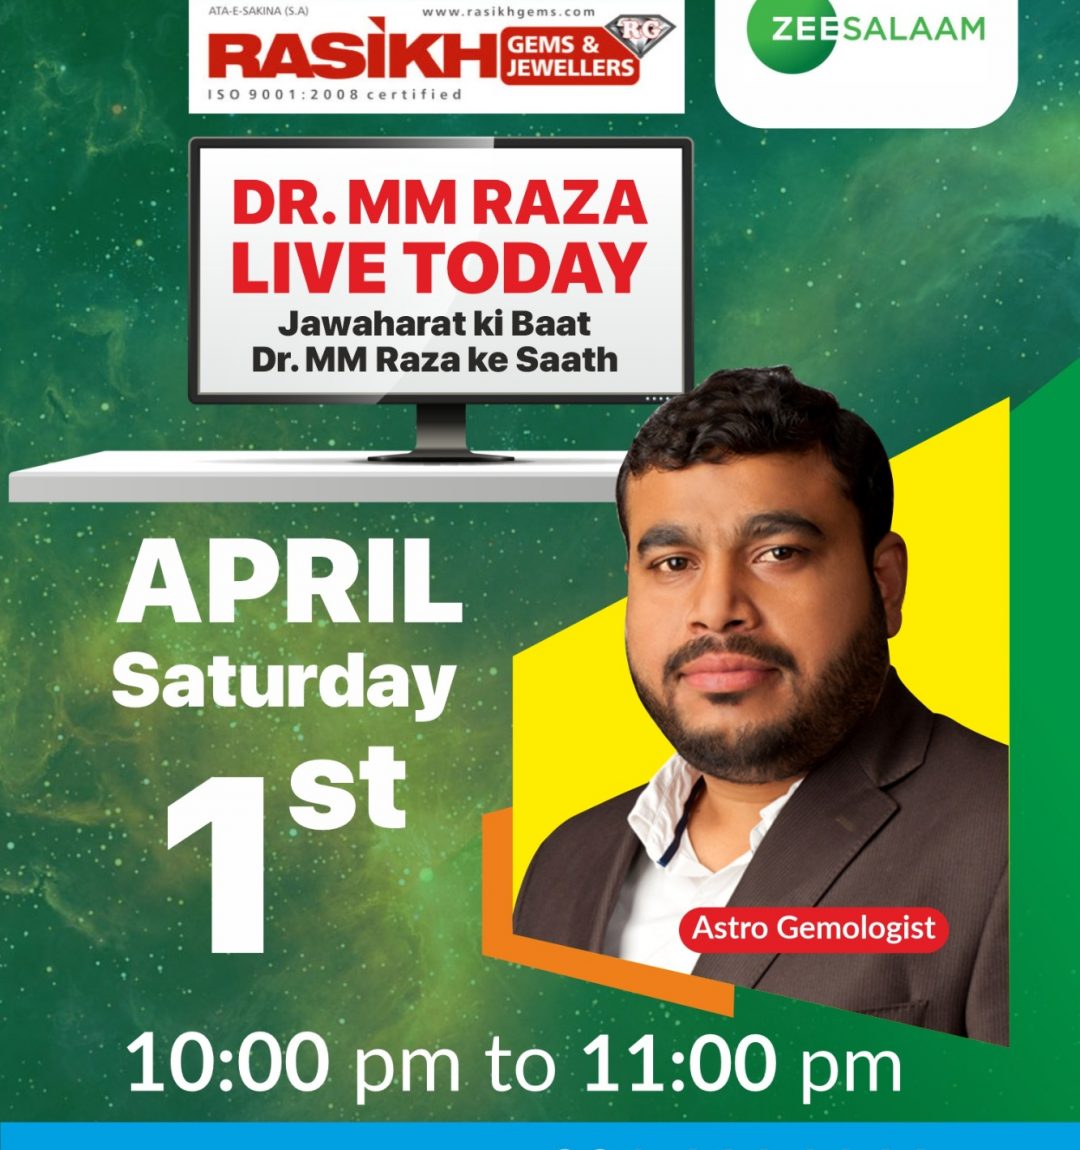 Dr MM RAZA world famous Gemologist on ZEE Salaam Live show India TV Channel